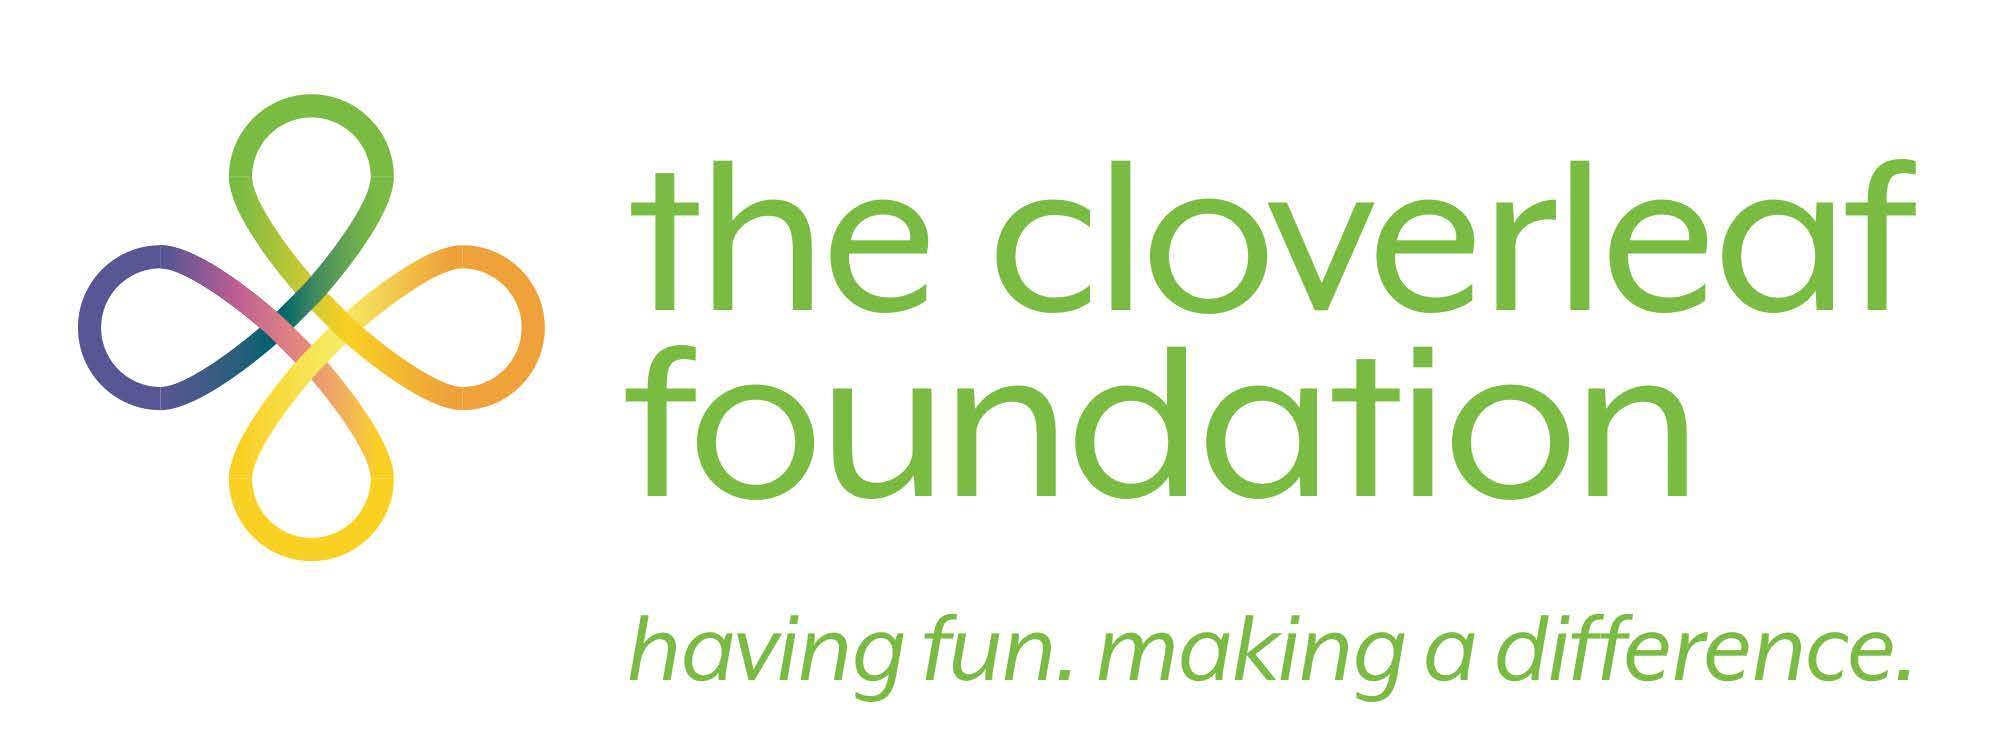 Cloverleaf foundation